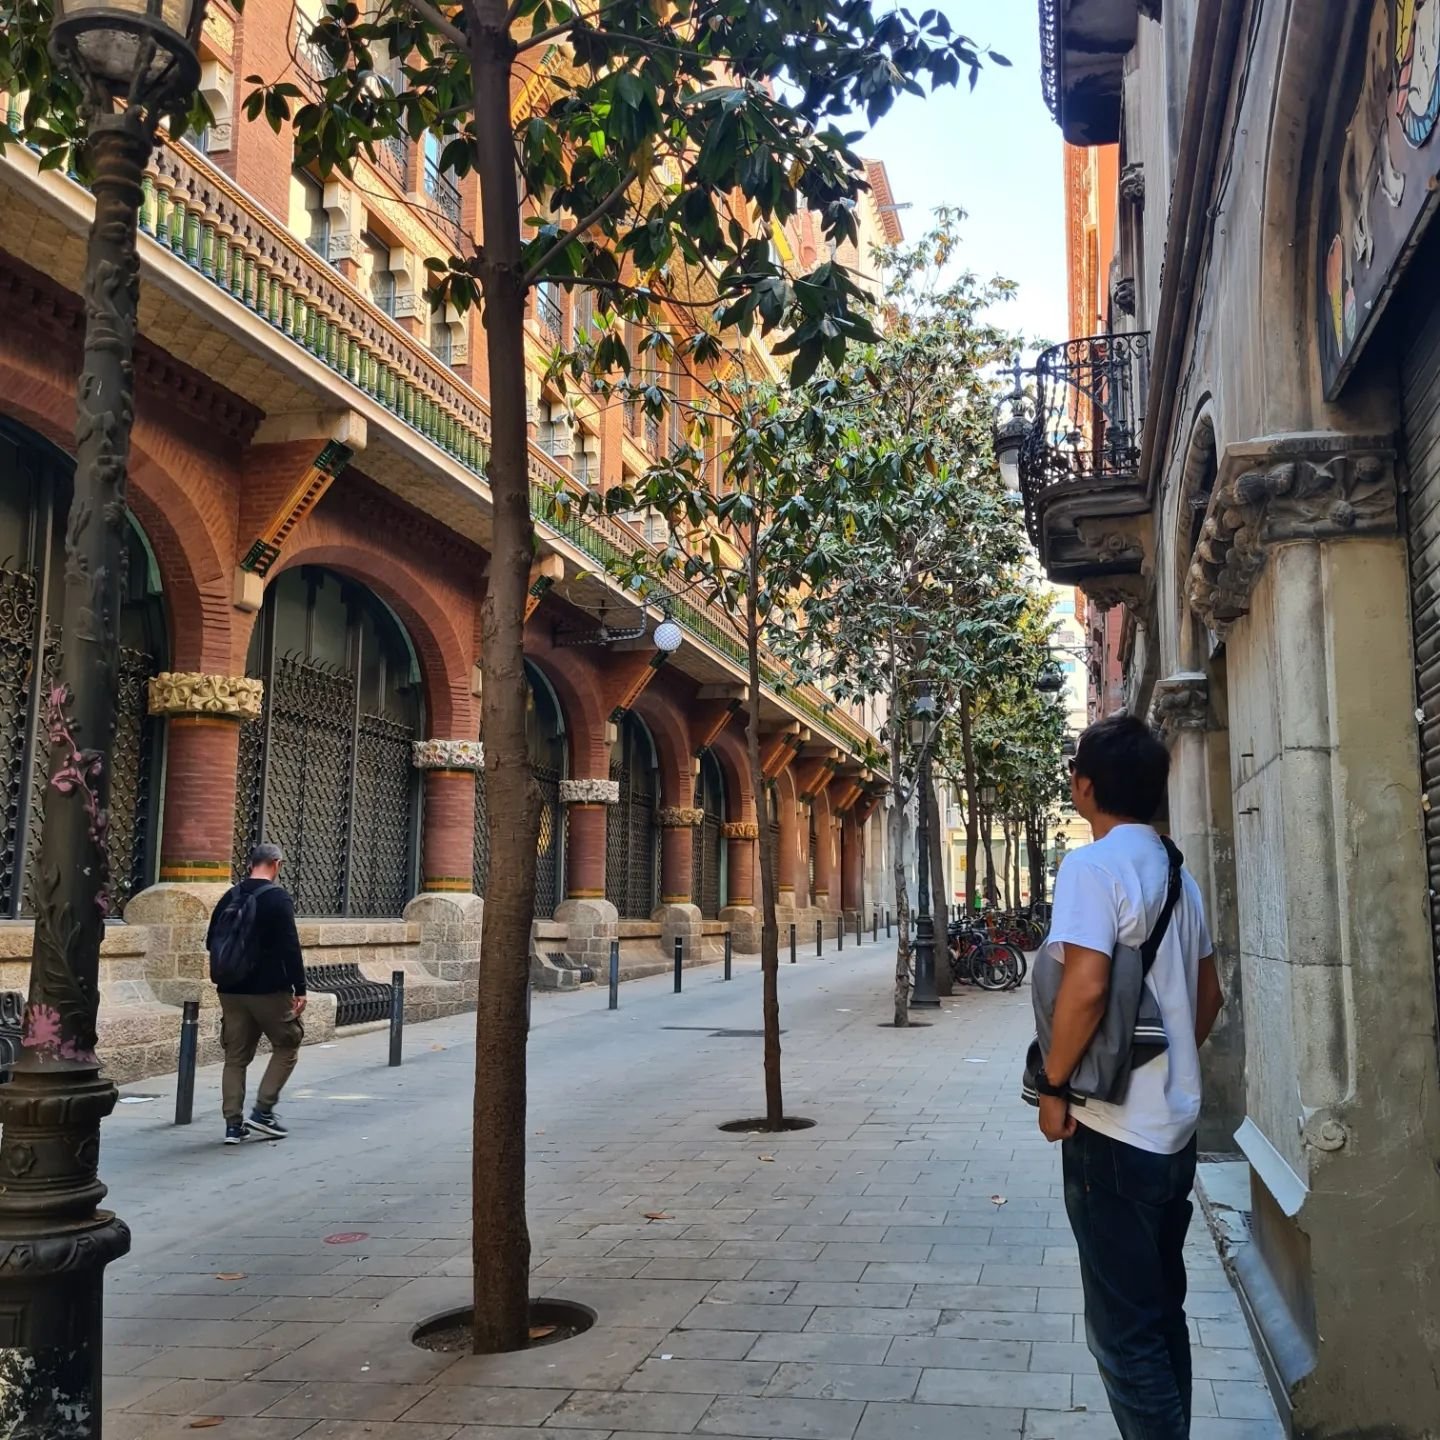 Walk along the iconic city 🇪🇸
#barcelona #グラフィックアーティスト #graphicdesign #Graphicartist #antonigaudi #naokistudios

https://naokistudios.com/works/